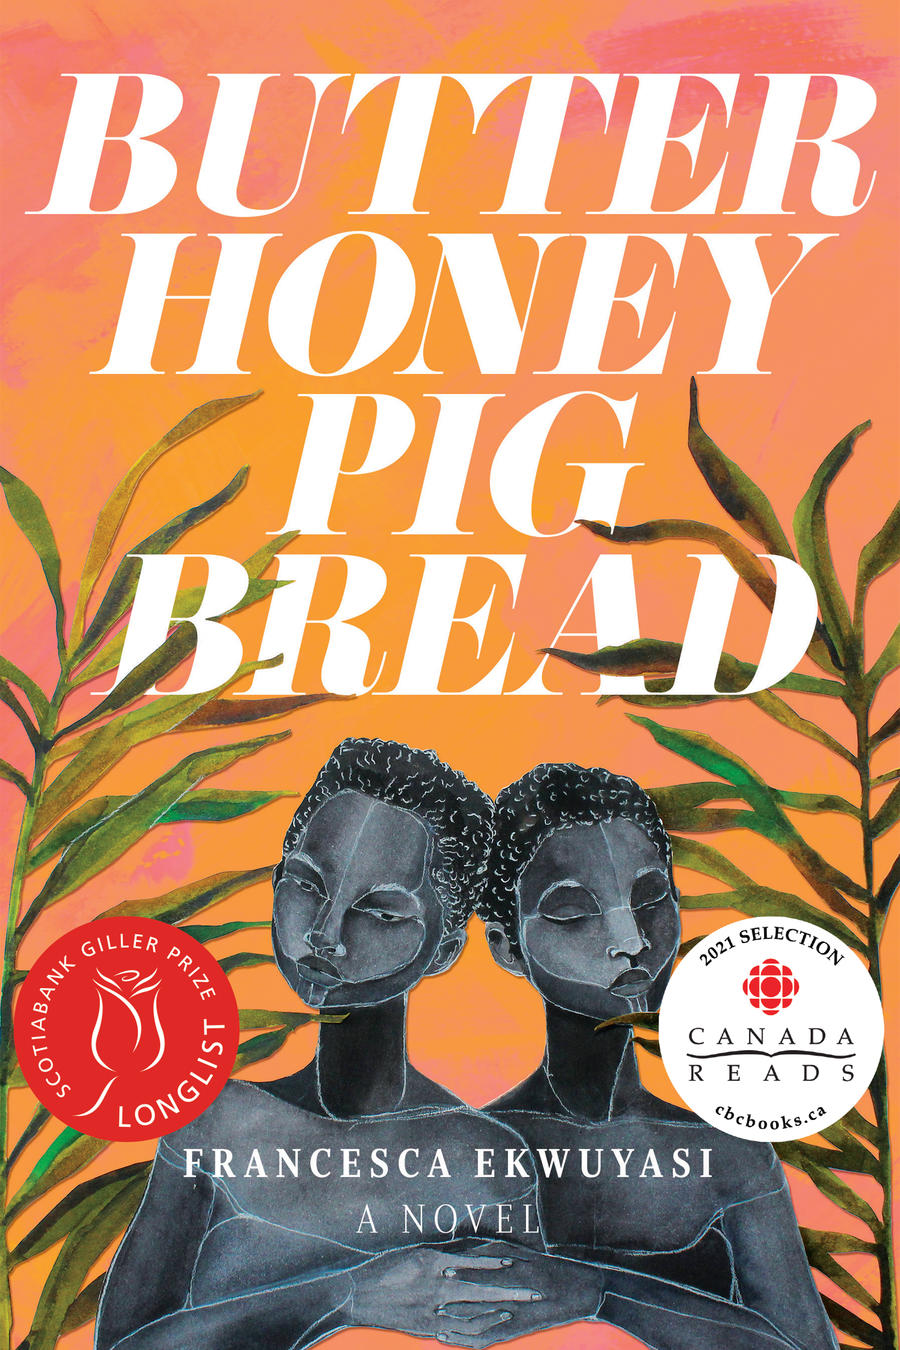 Francesca Ekwuyasi wrote Butter Honey Pig Bread